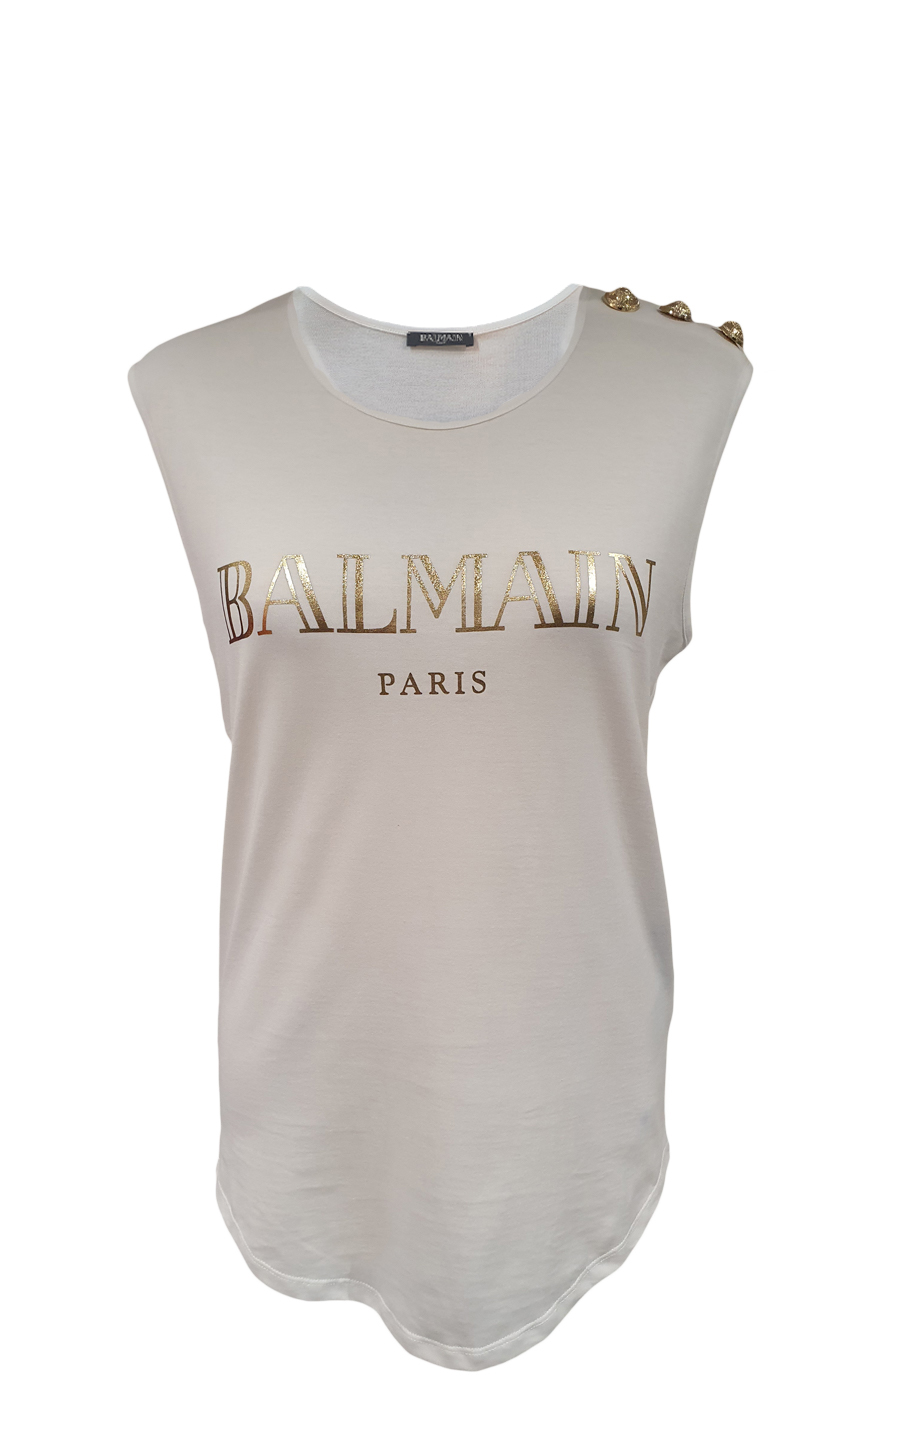 Balmain Paris Sleeveless T-Shirt In White And Gold - Rogue Menswear